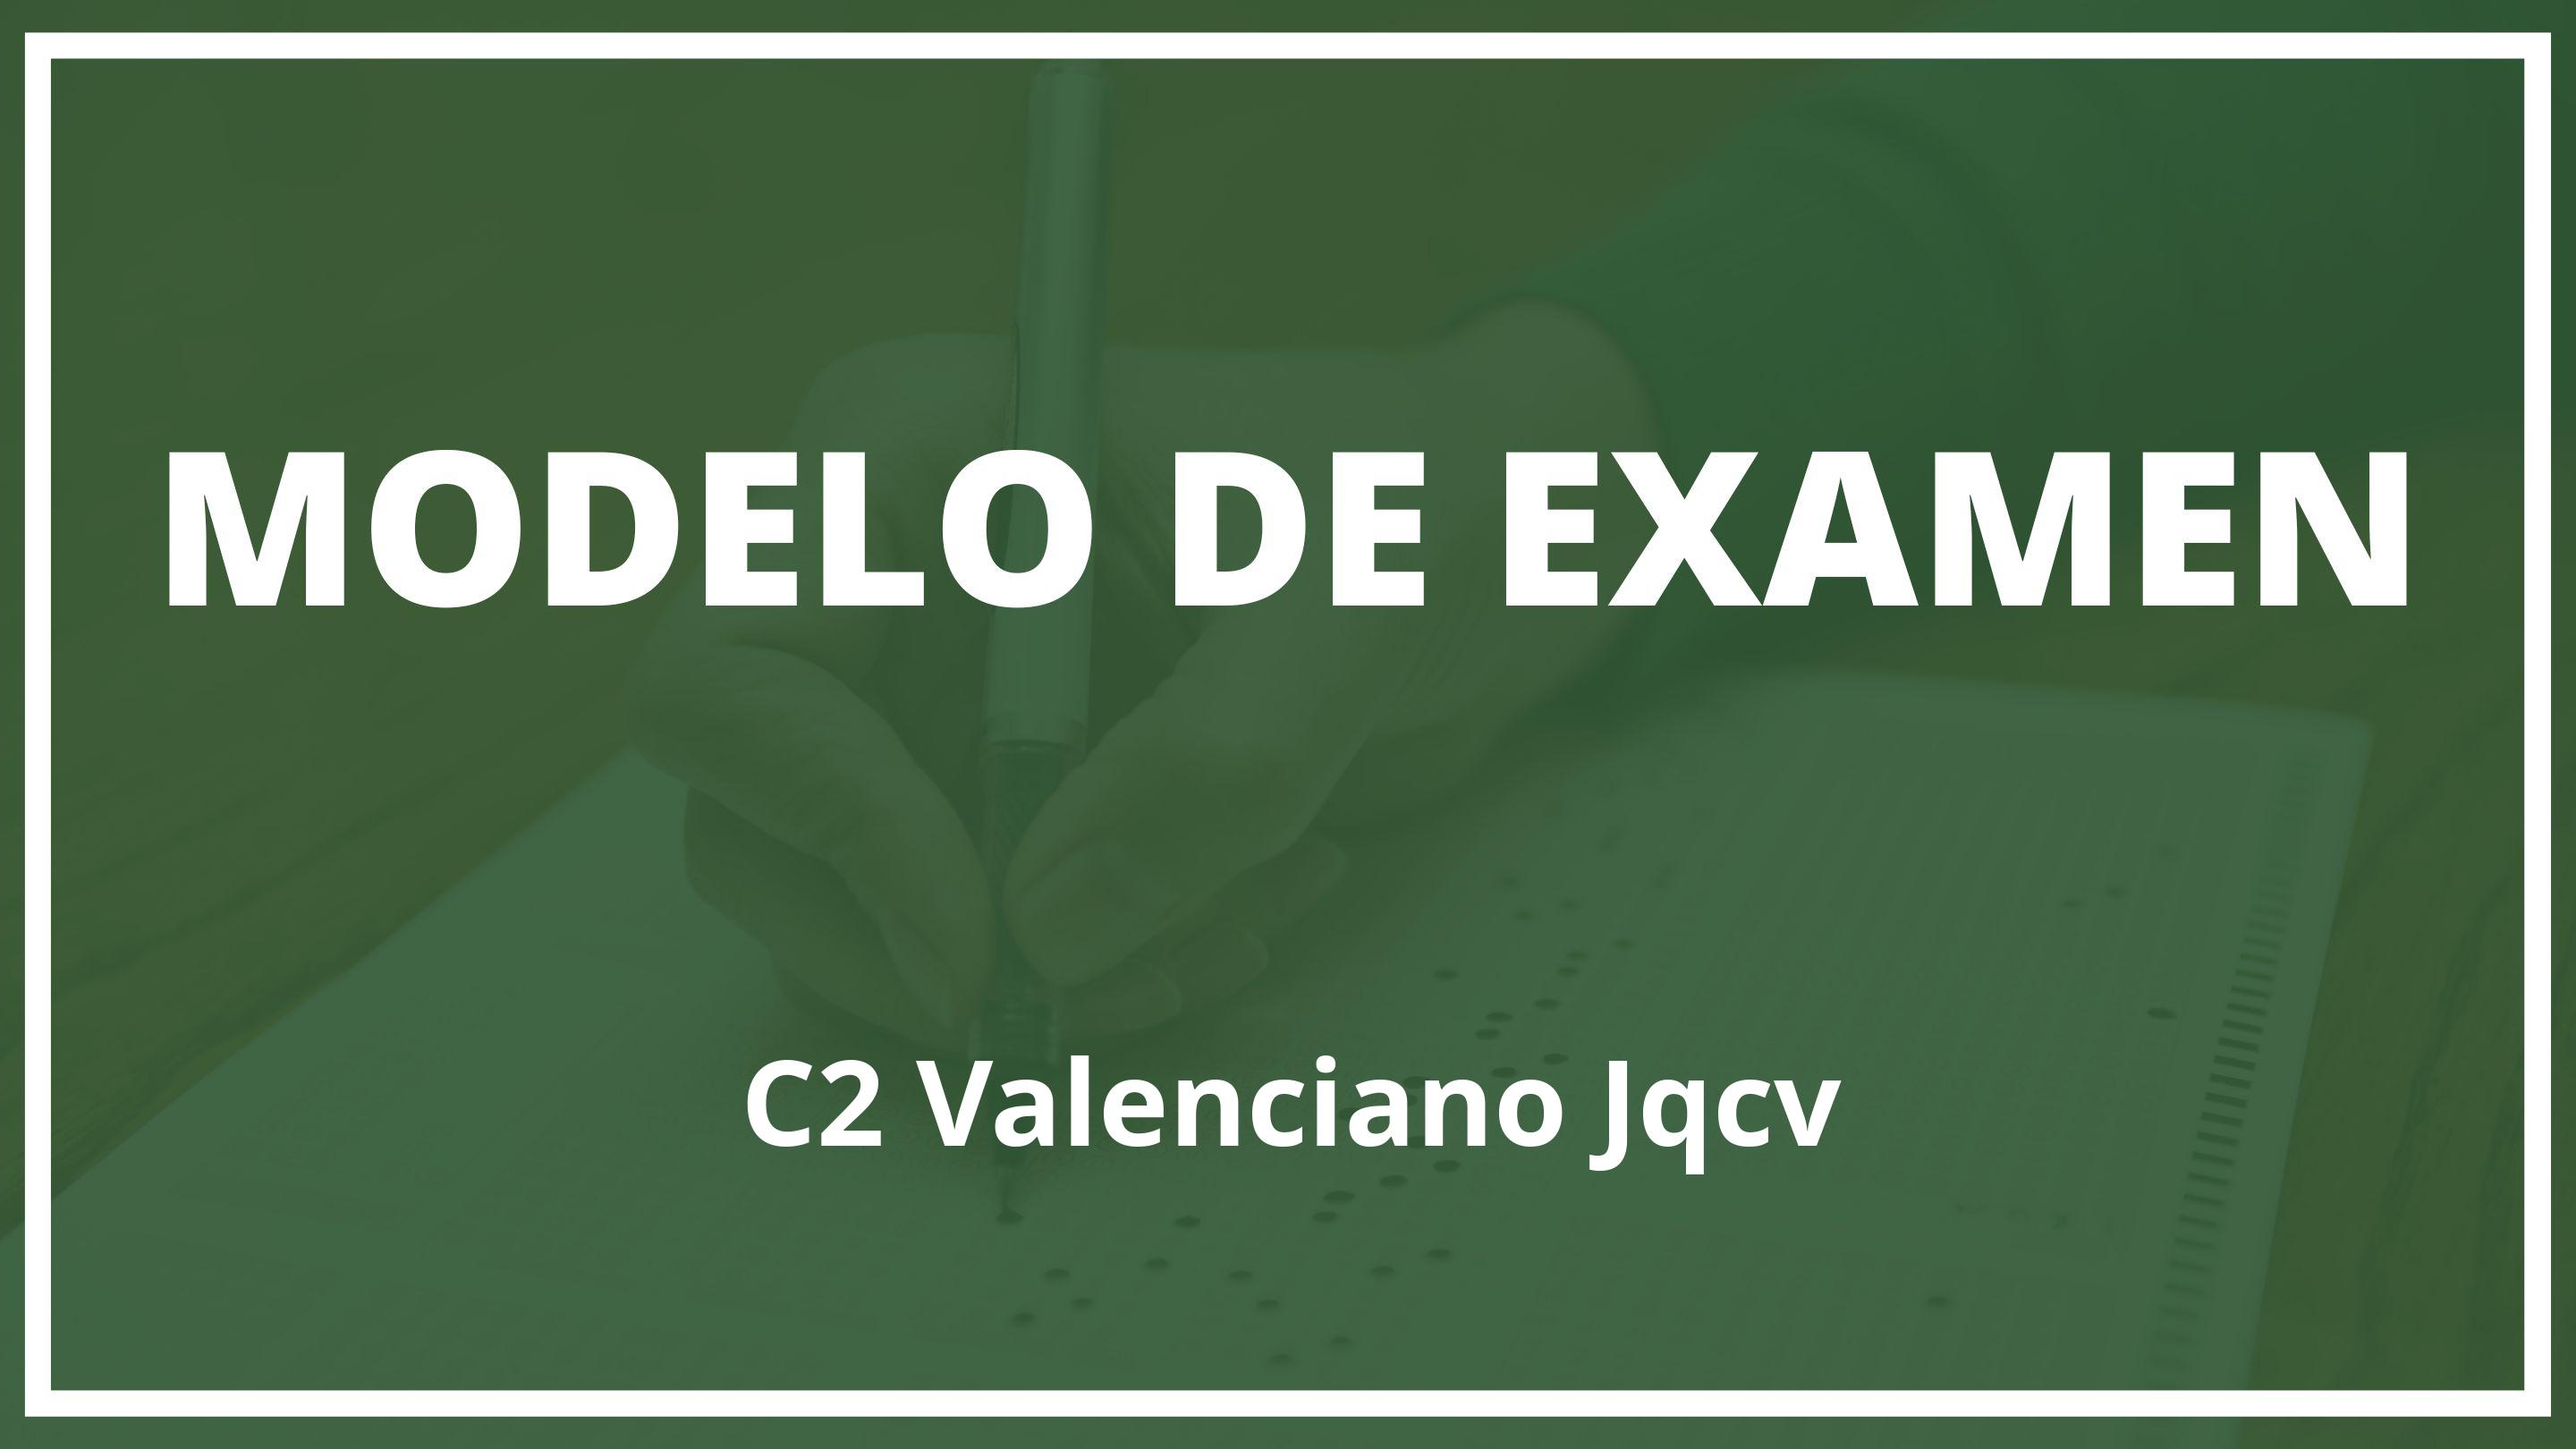 Examen C2 Valenciano Jqcv